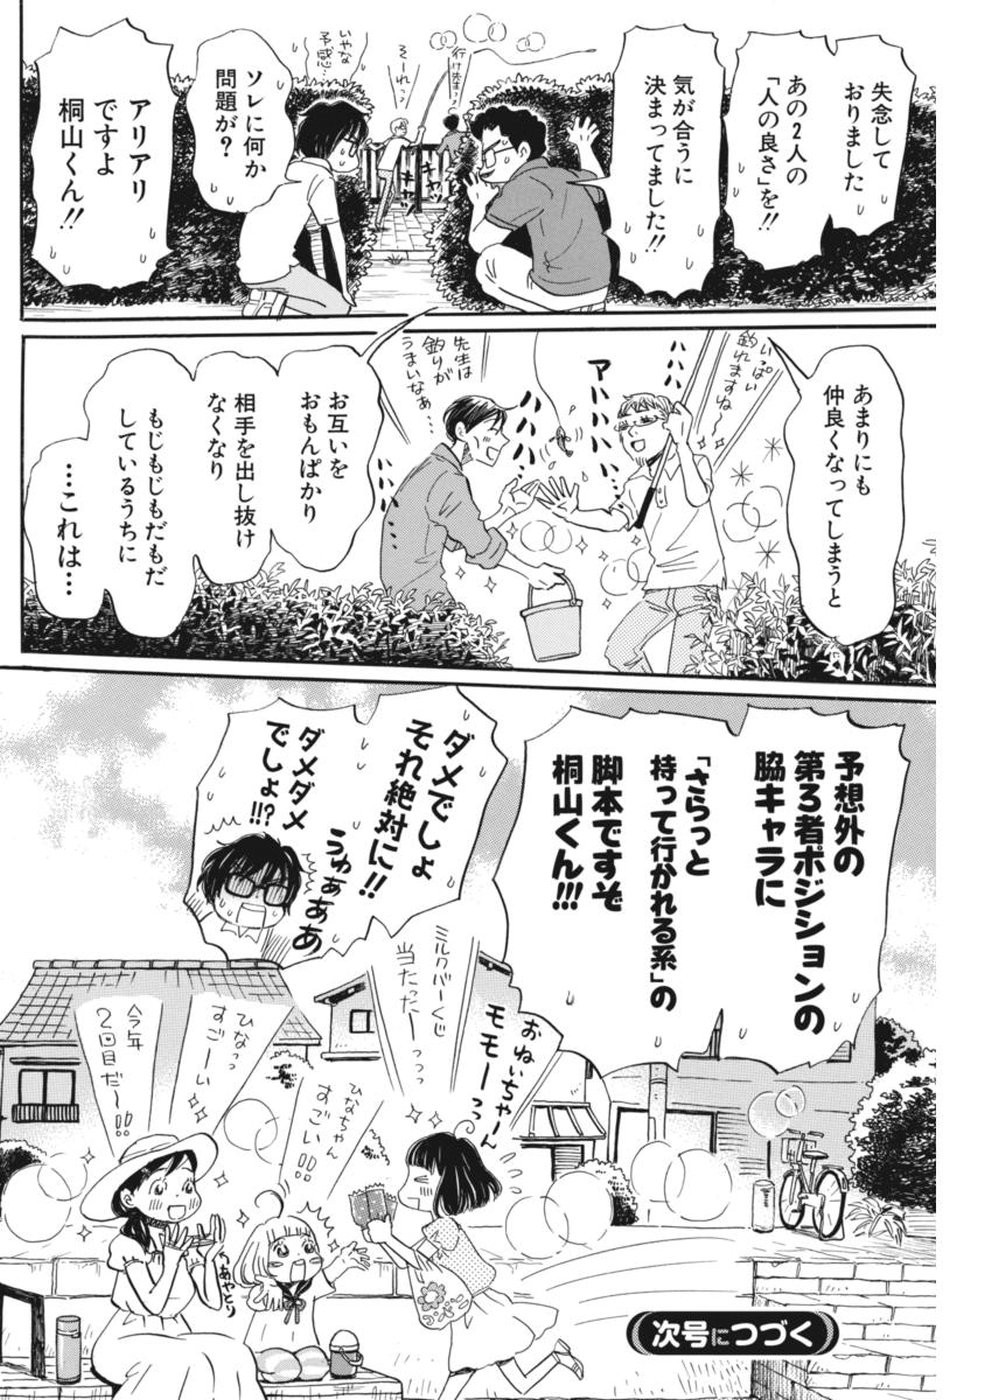 3 Gatsu no Lion - Chapter 145 - Page 8